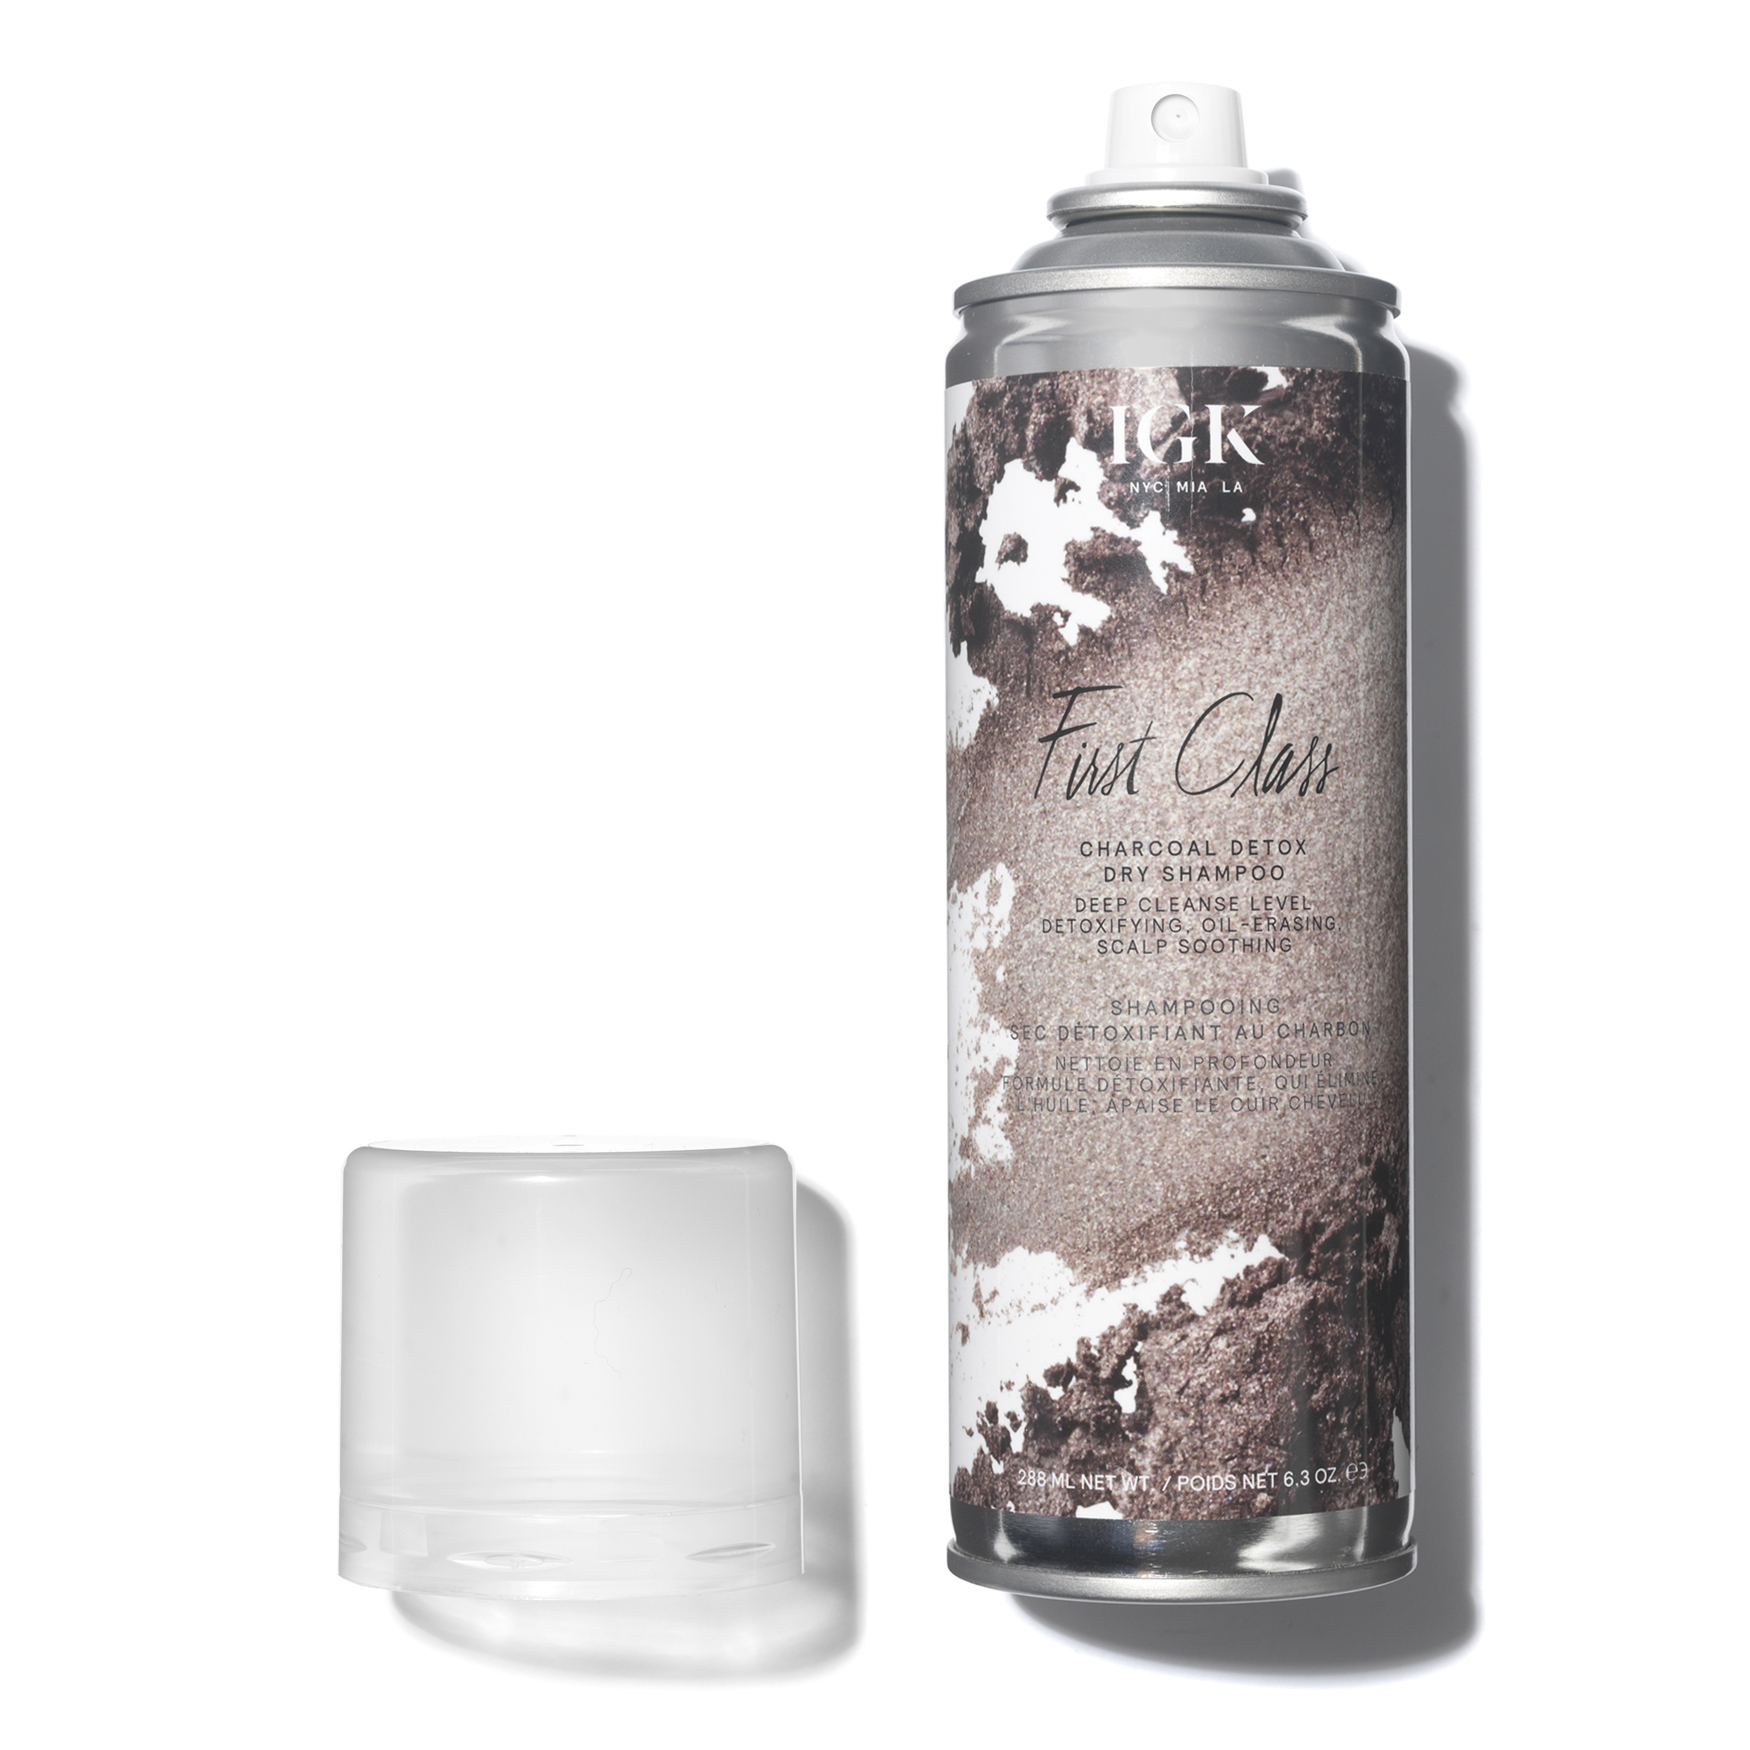 IGK Hair First Class Charcoal Detox Dry Shampoo | Space NK